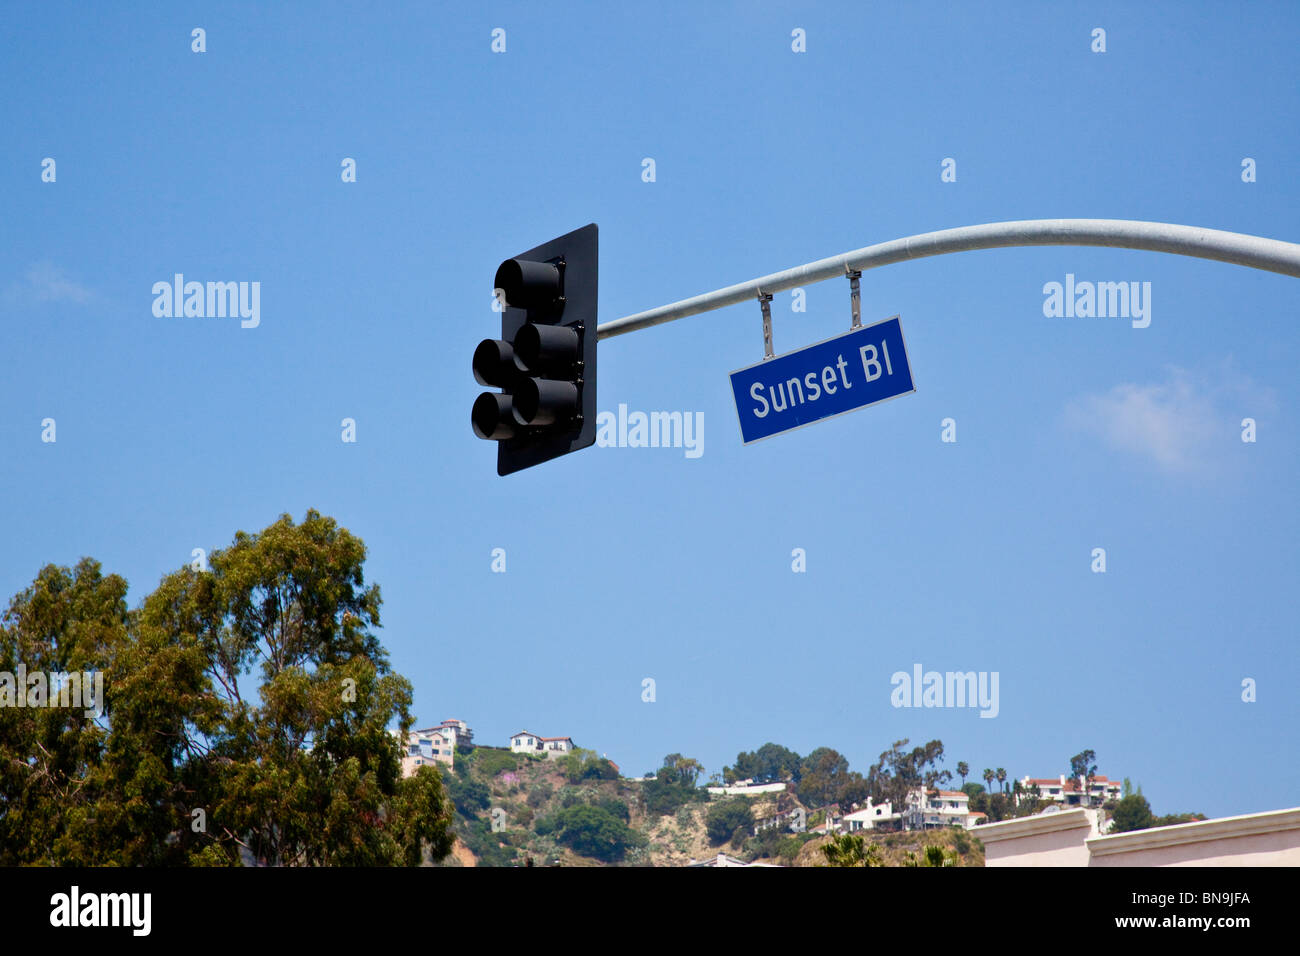 Sunset Boulevard in Los Angeles, California Stock Photo